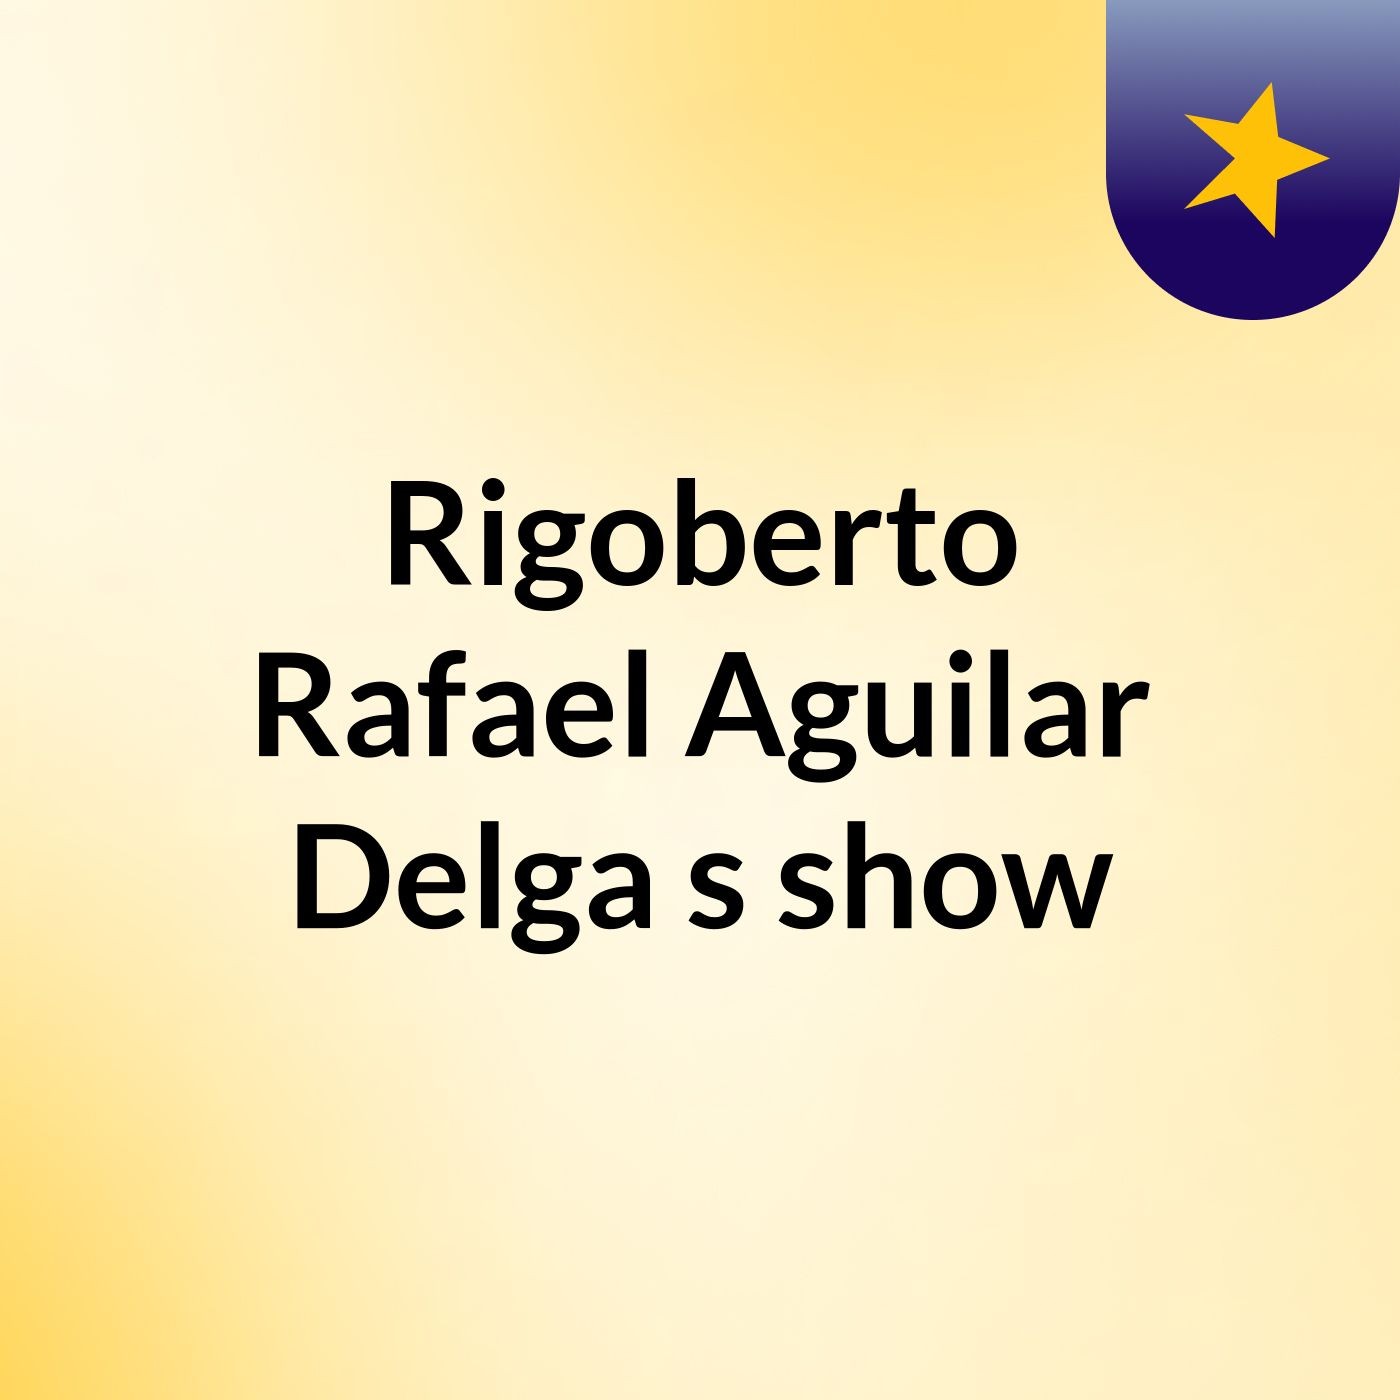 Rigoberto Rafael Aguilar Delga's show